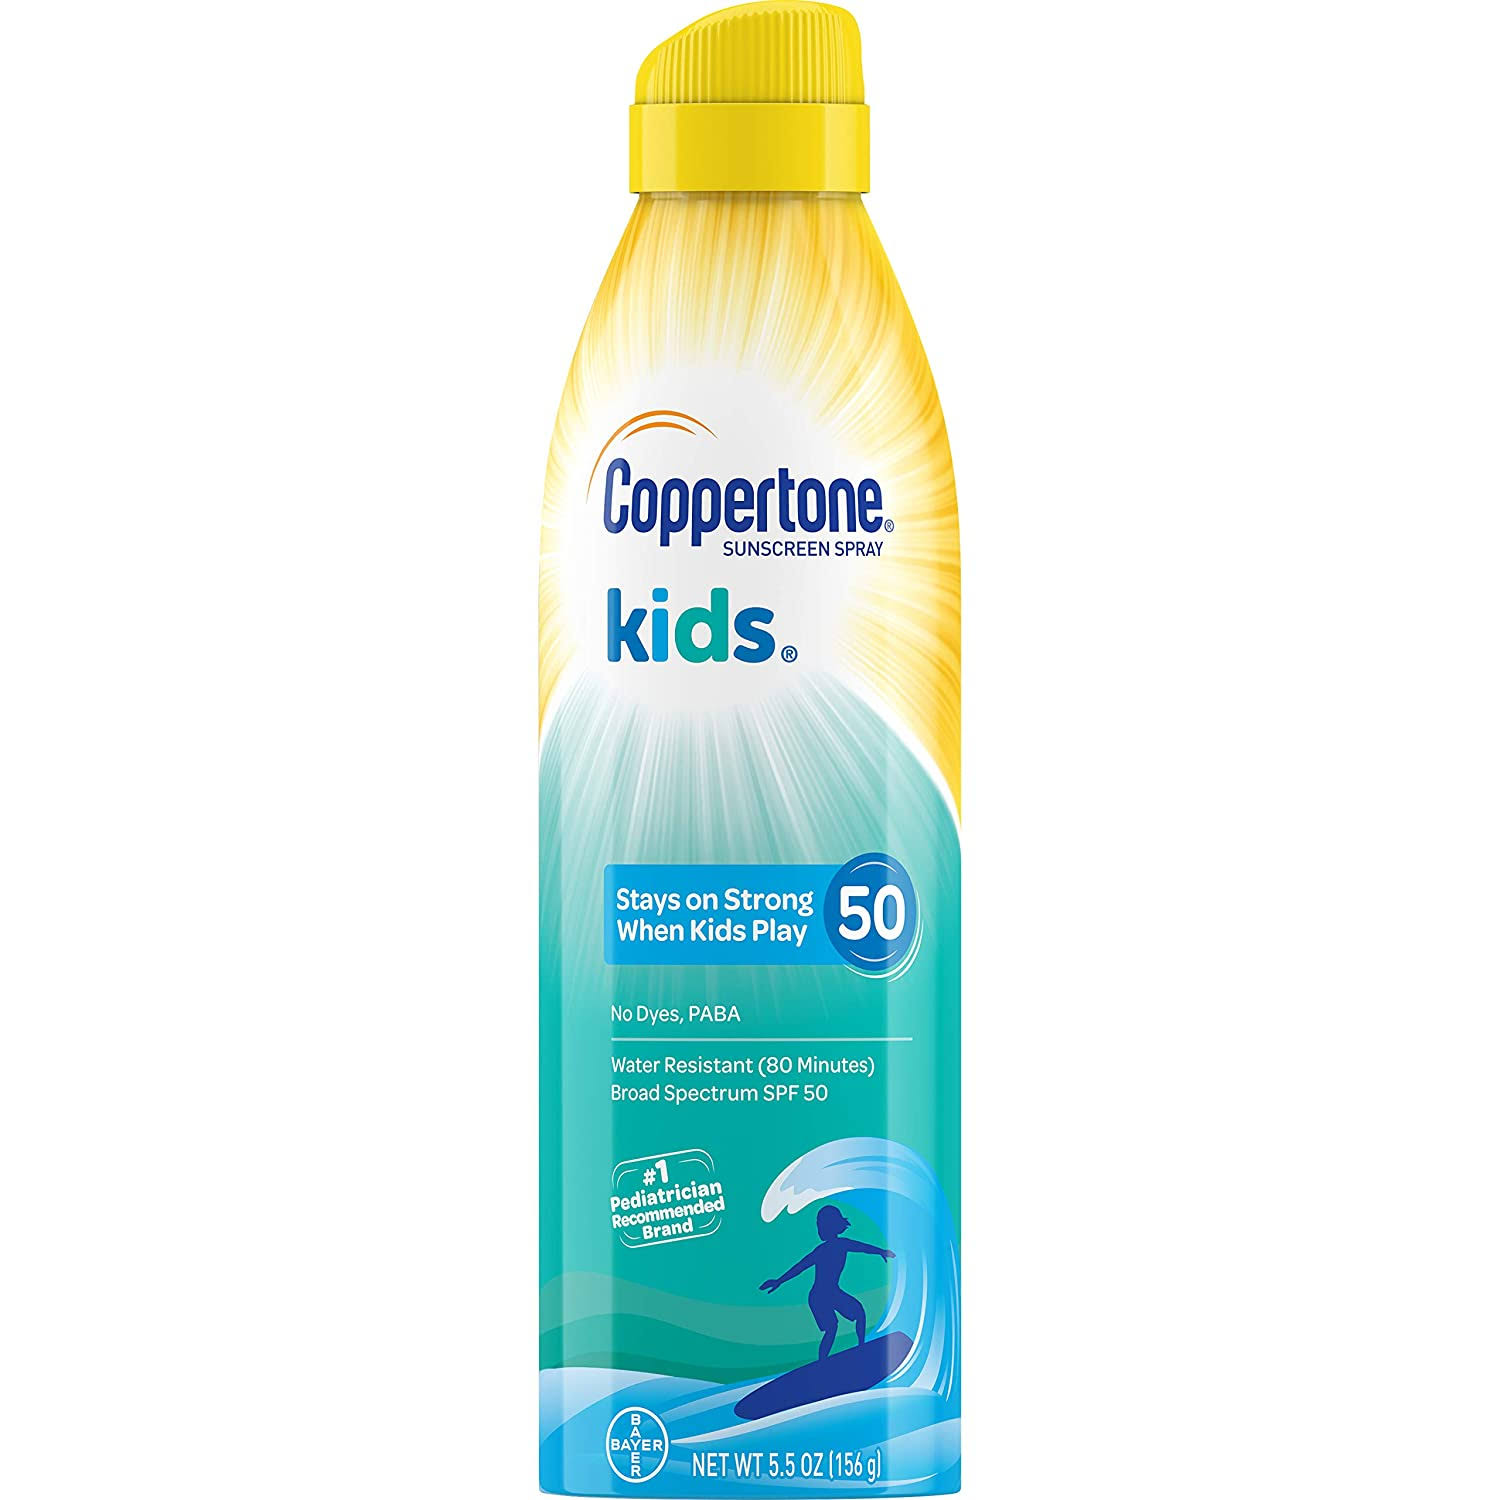 Coppertone Kids SPF 50 Sunscreen Spray - Water Resistant, 5.5oz